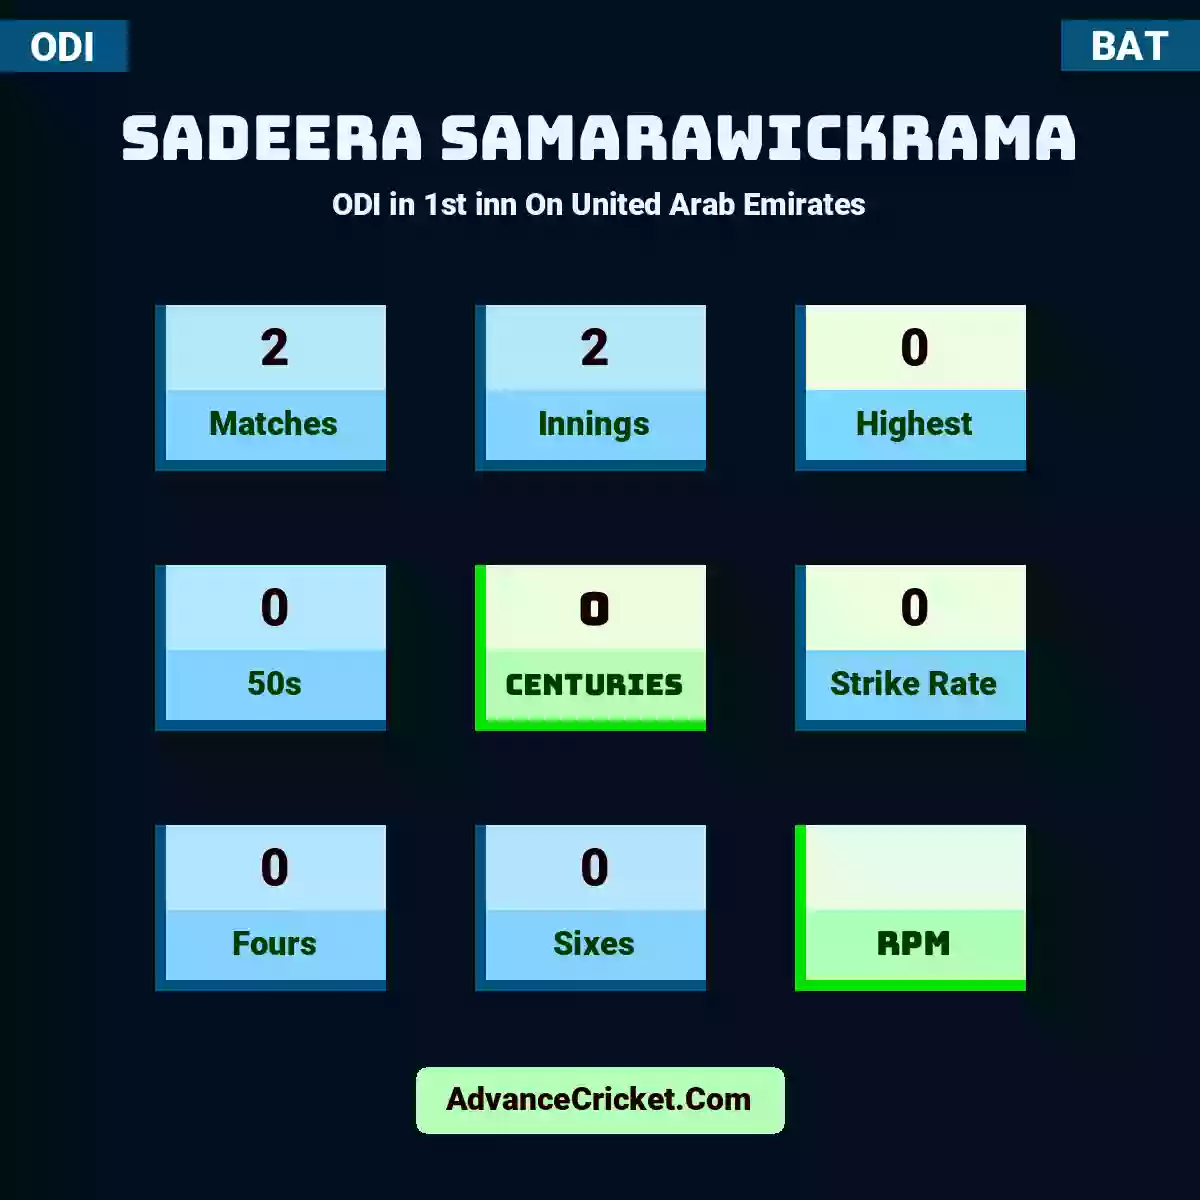 Sadeera Samarawickrama ODI  in 1st inn On United Arab Emirates, Sadeera Samarawickrama played 2 matches, scored 0 runs as highest, 0 half-centuries, and 0 centuries, with a strike rate of 0. S.Samarawickrama hit 0 fours and 0 sixes.